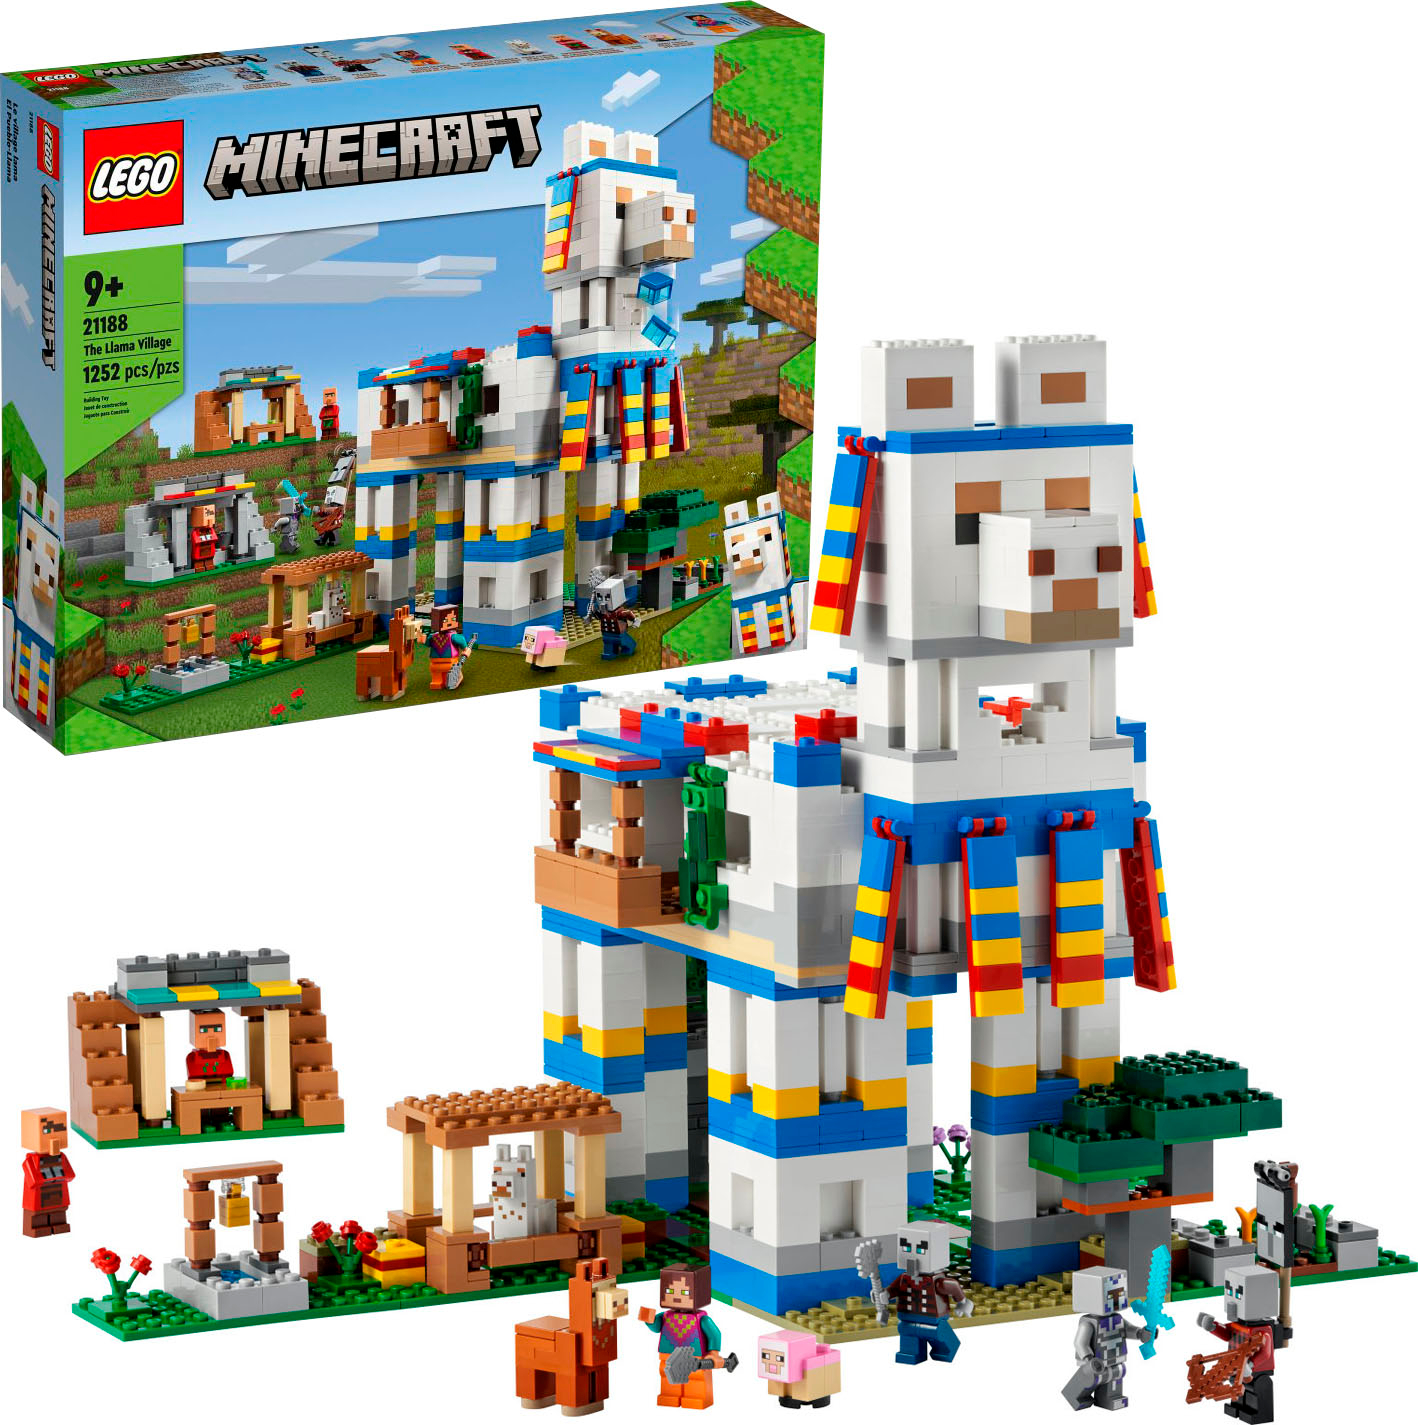 LEGO Minecraft The Llama Village 21188 6379582 - Best